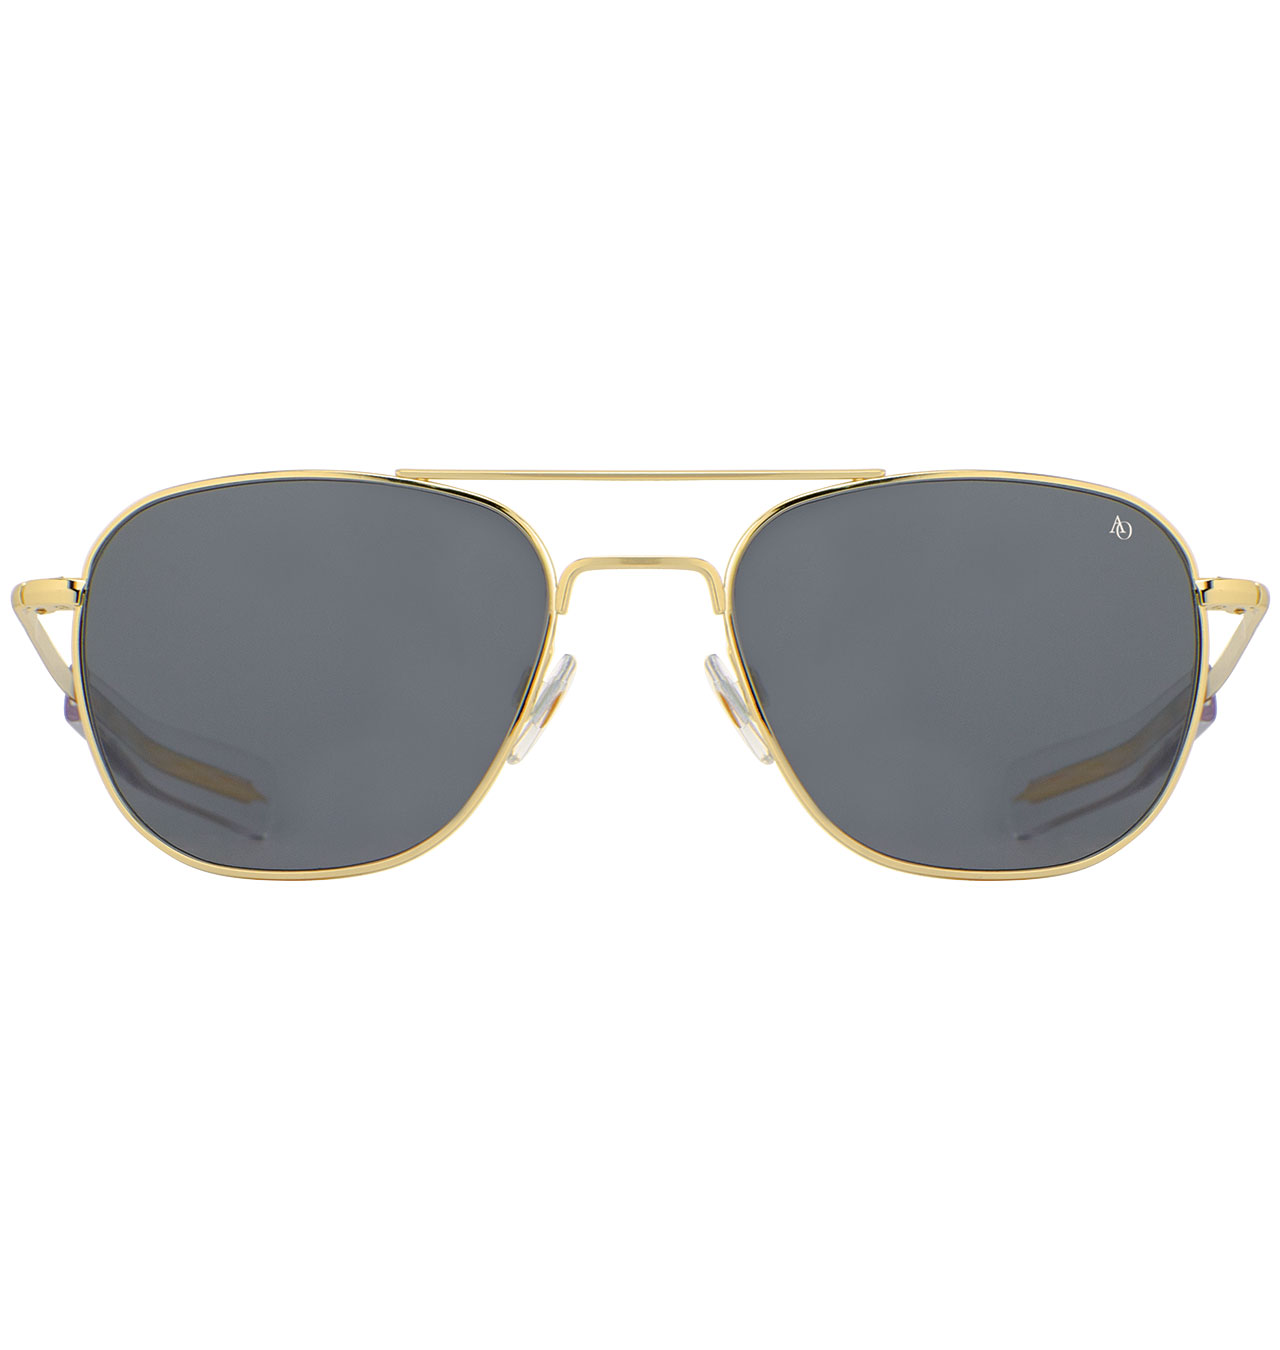 American Optical - Original Pilot Sunglasses Polarized - Gold